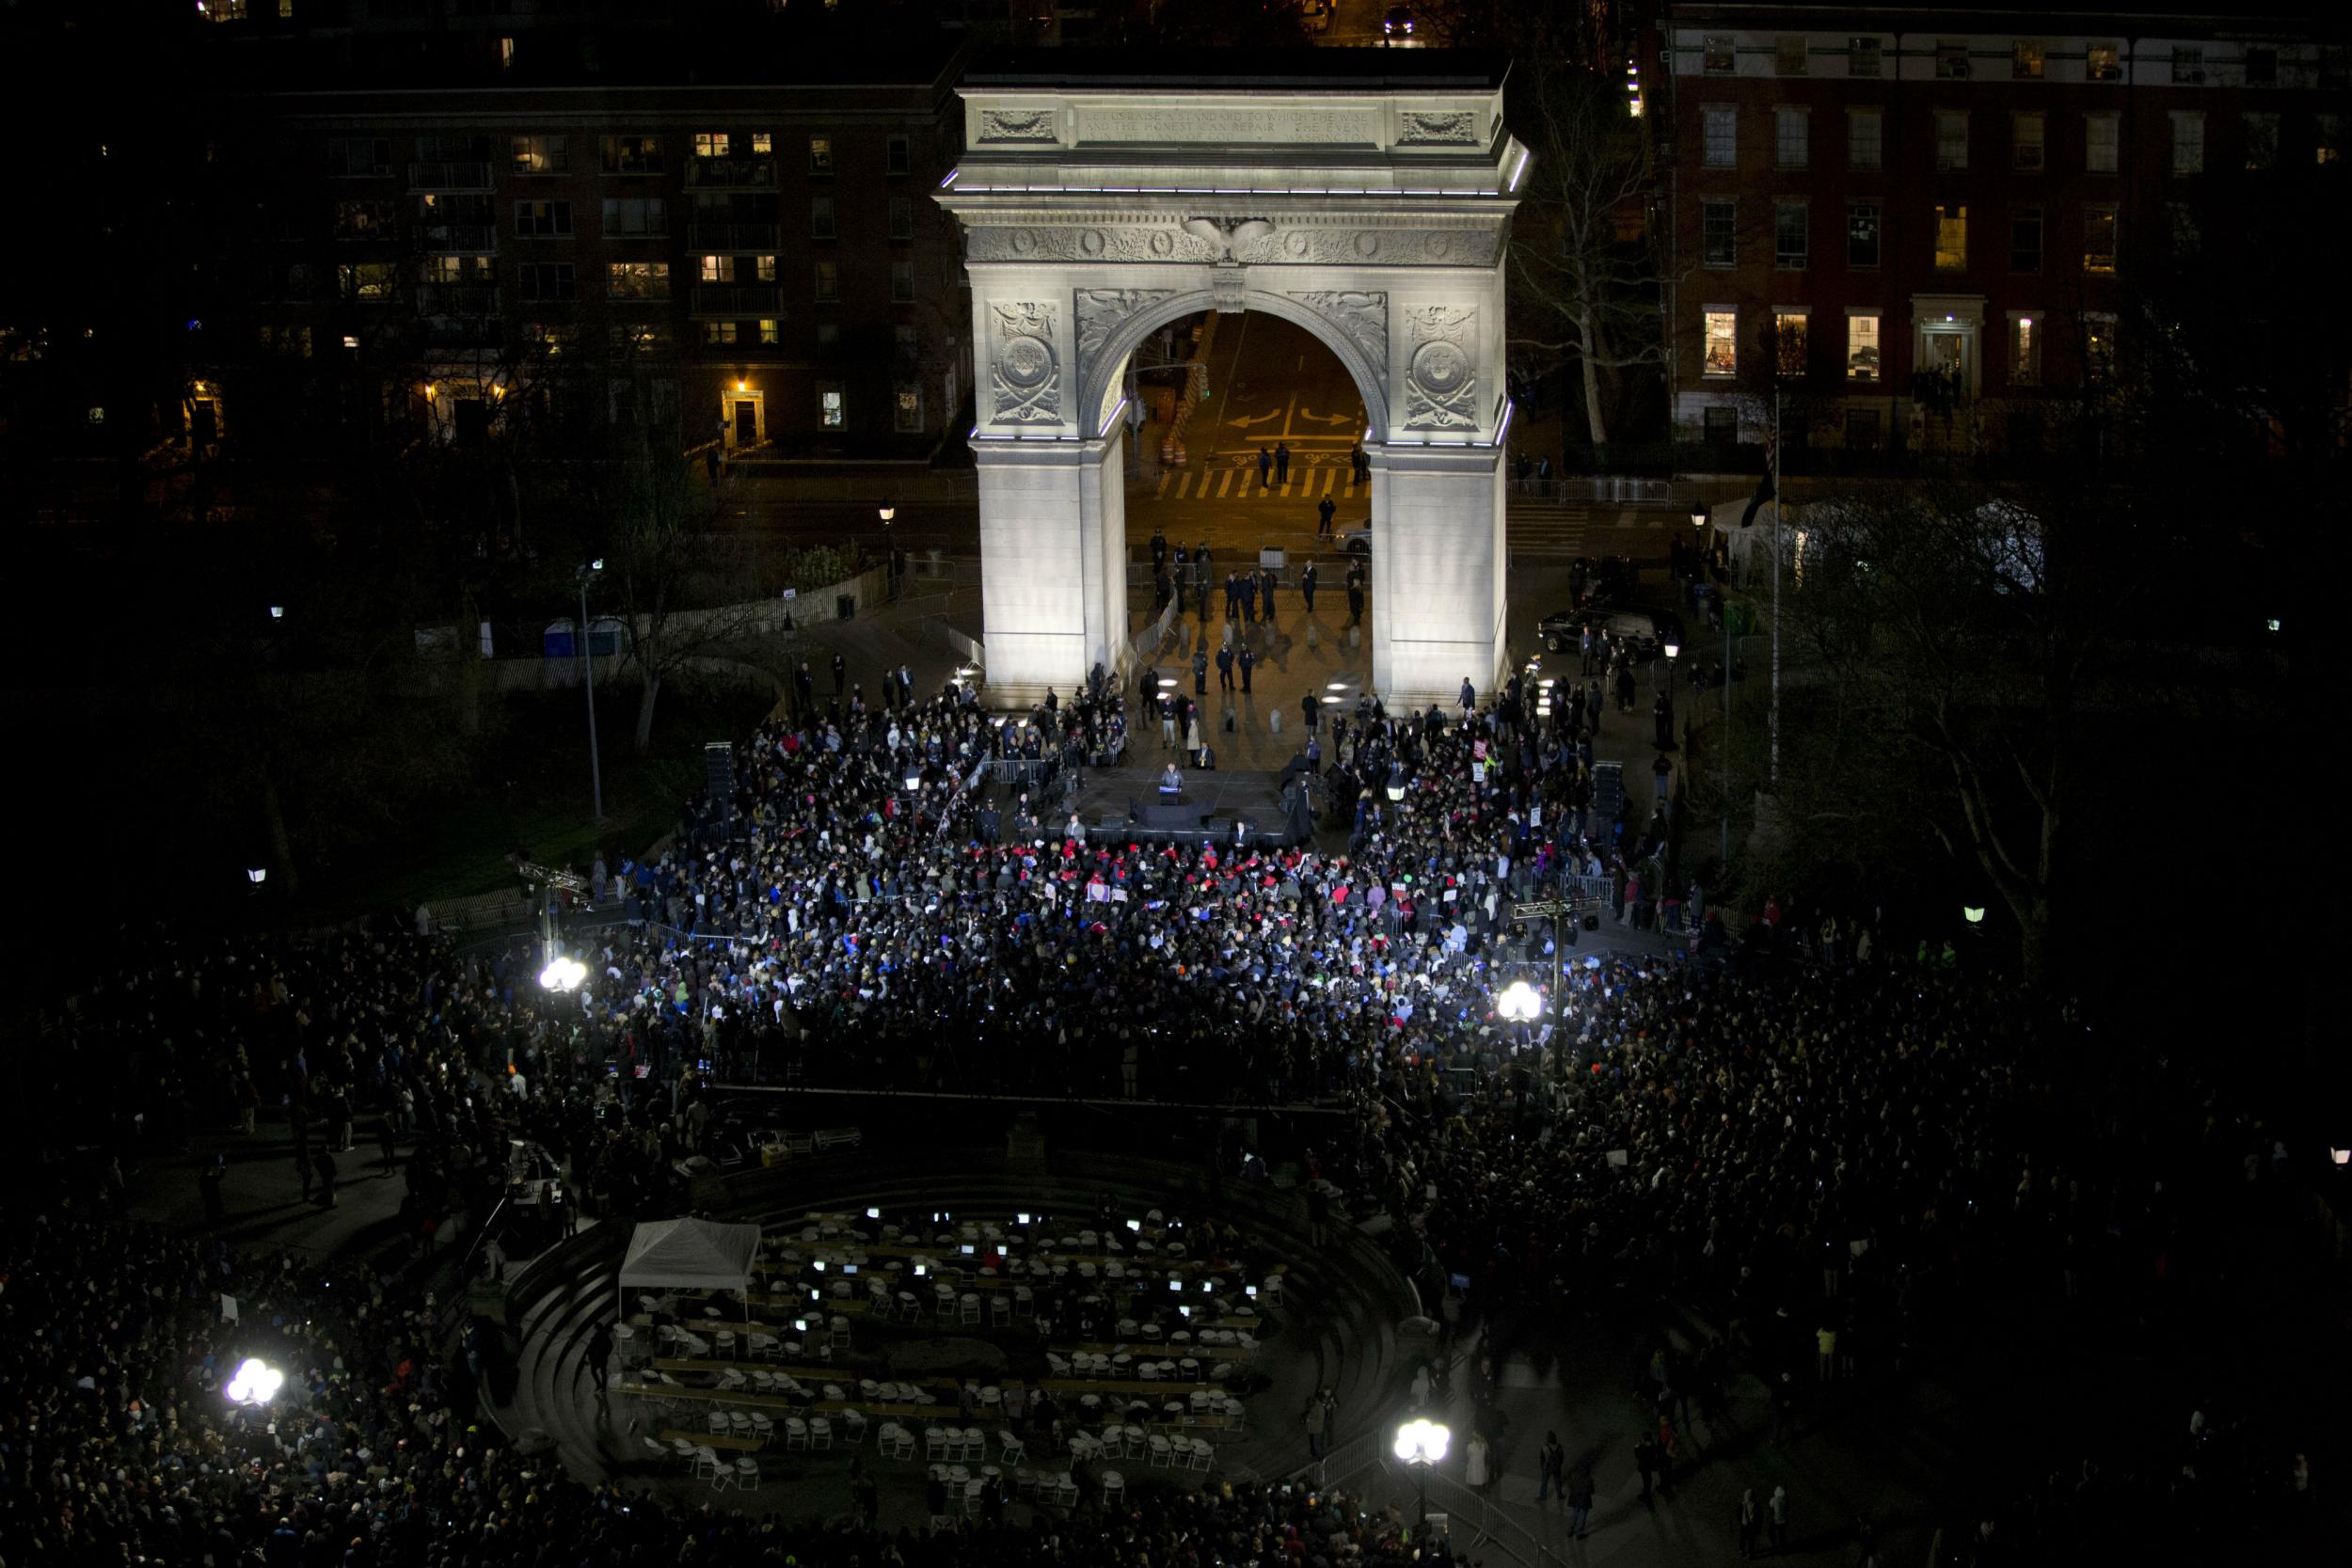 Bernie Sanders spoke in front of at least 28,000 people in Washington Square Park